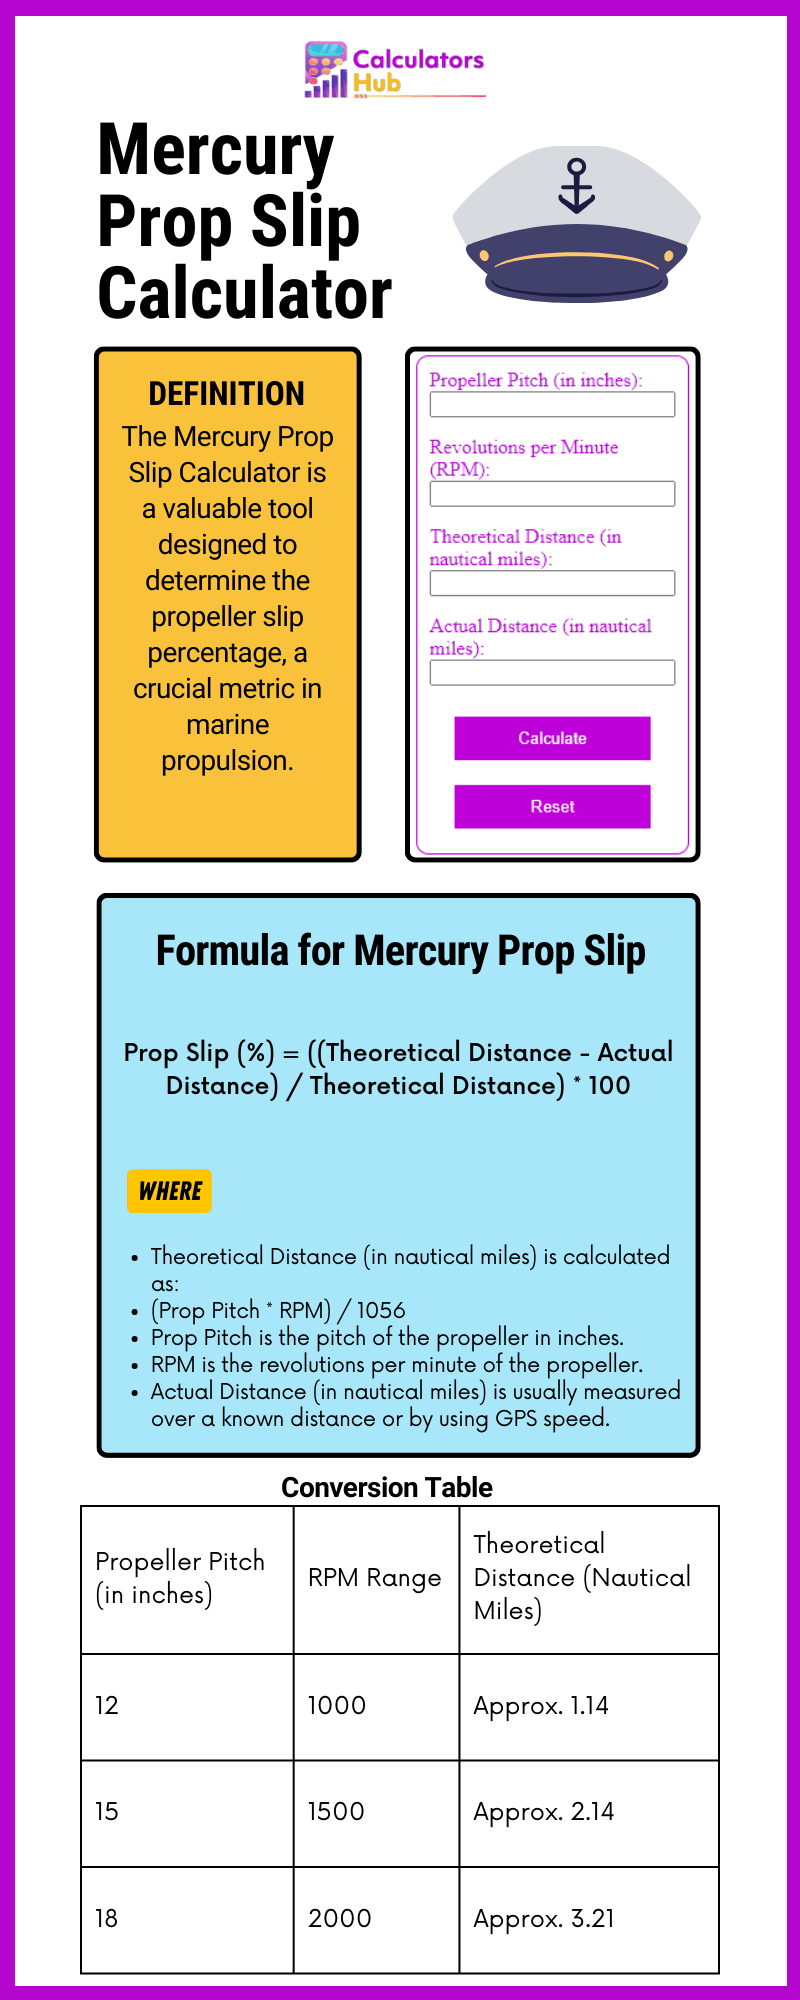 Mercury 螺旋桨滑移计算器